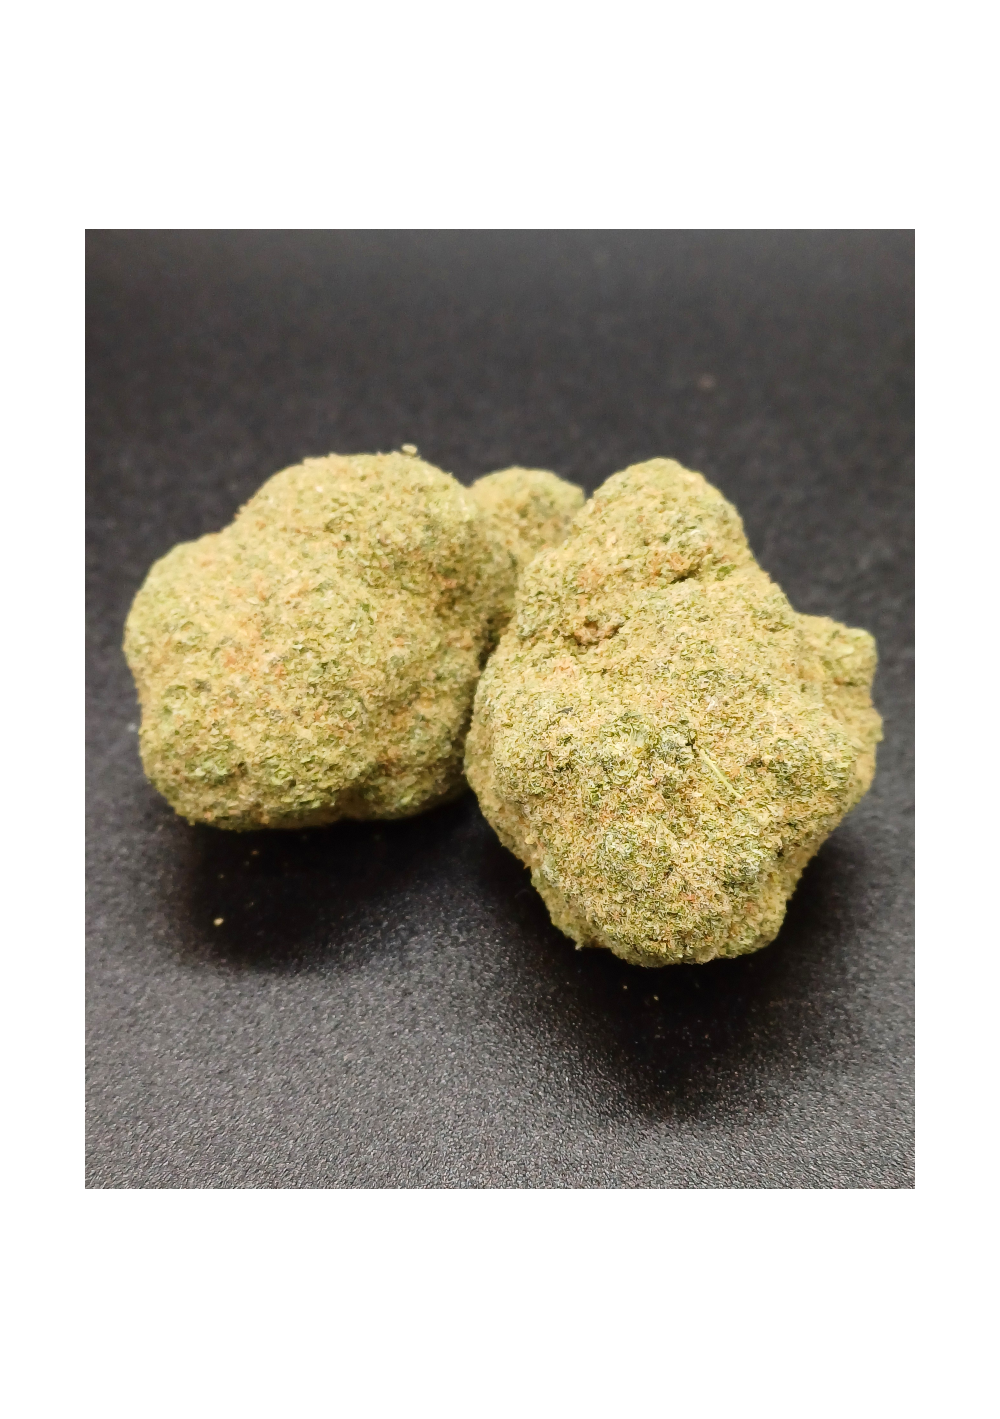 Candy Kush CBD - Indoor Premium California, Cannabis Light